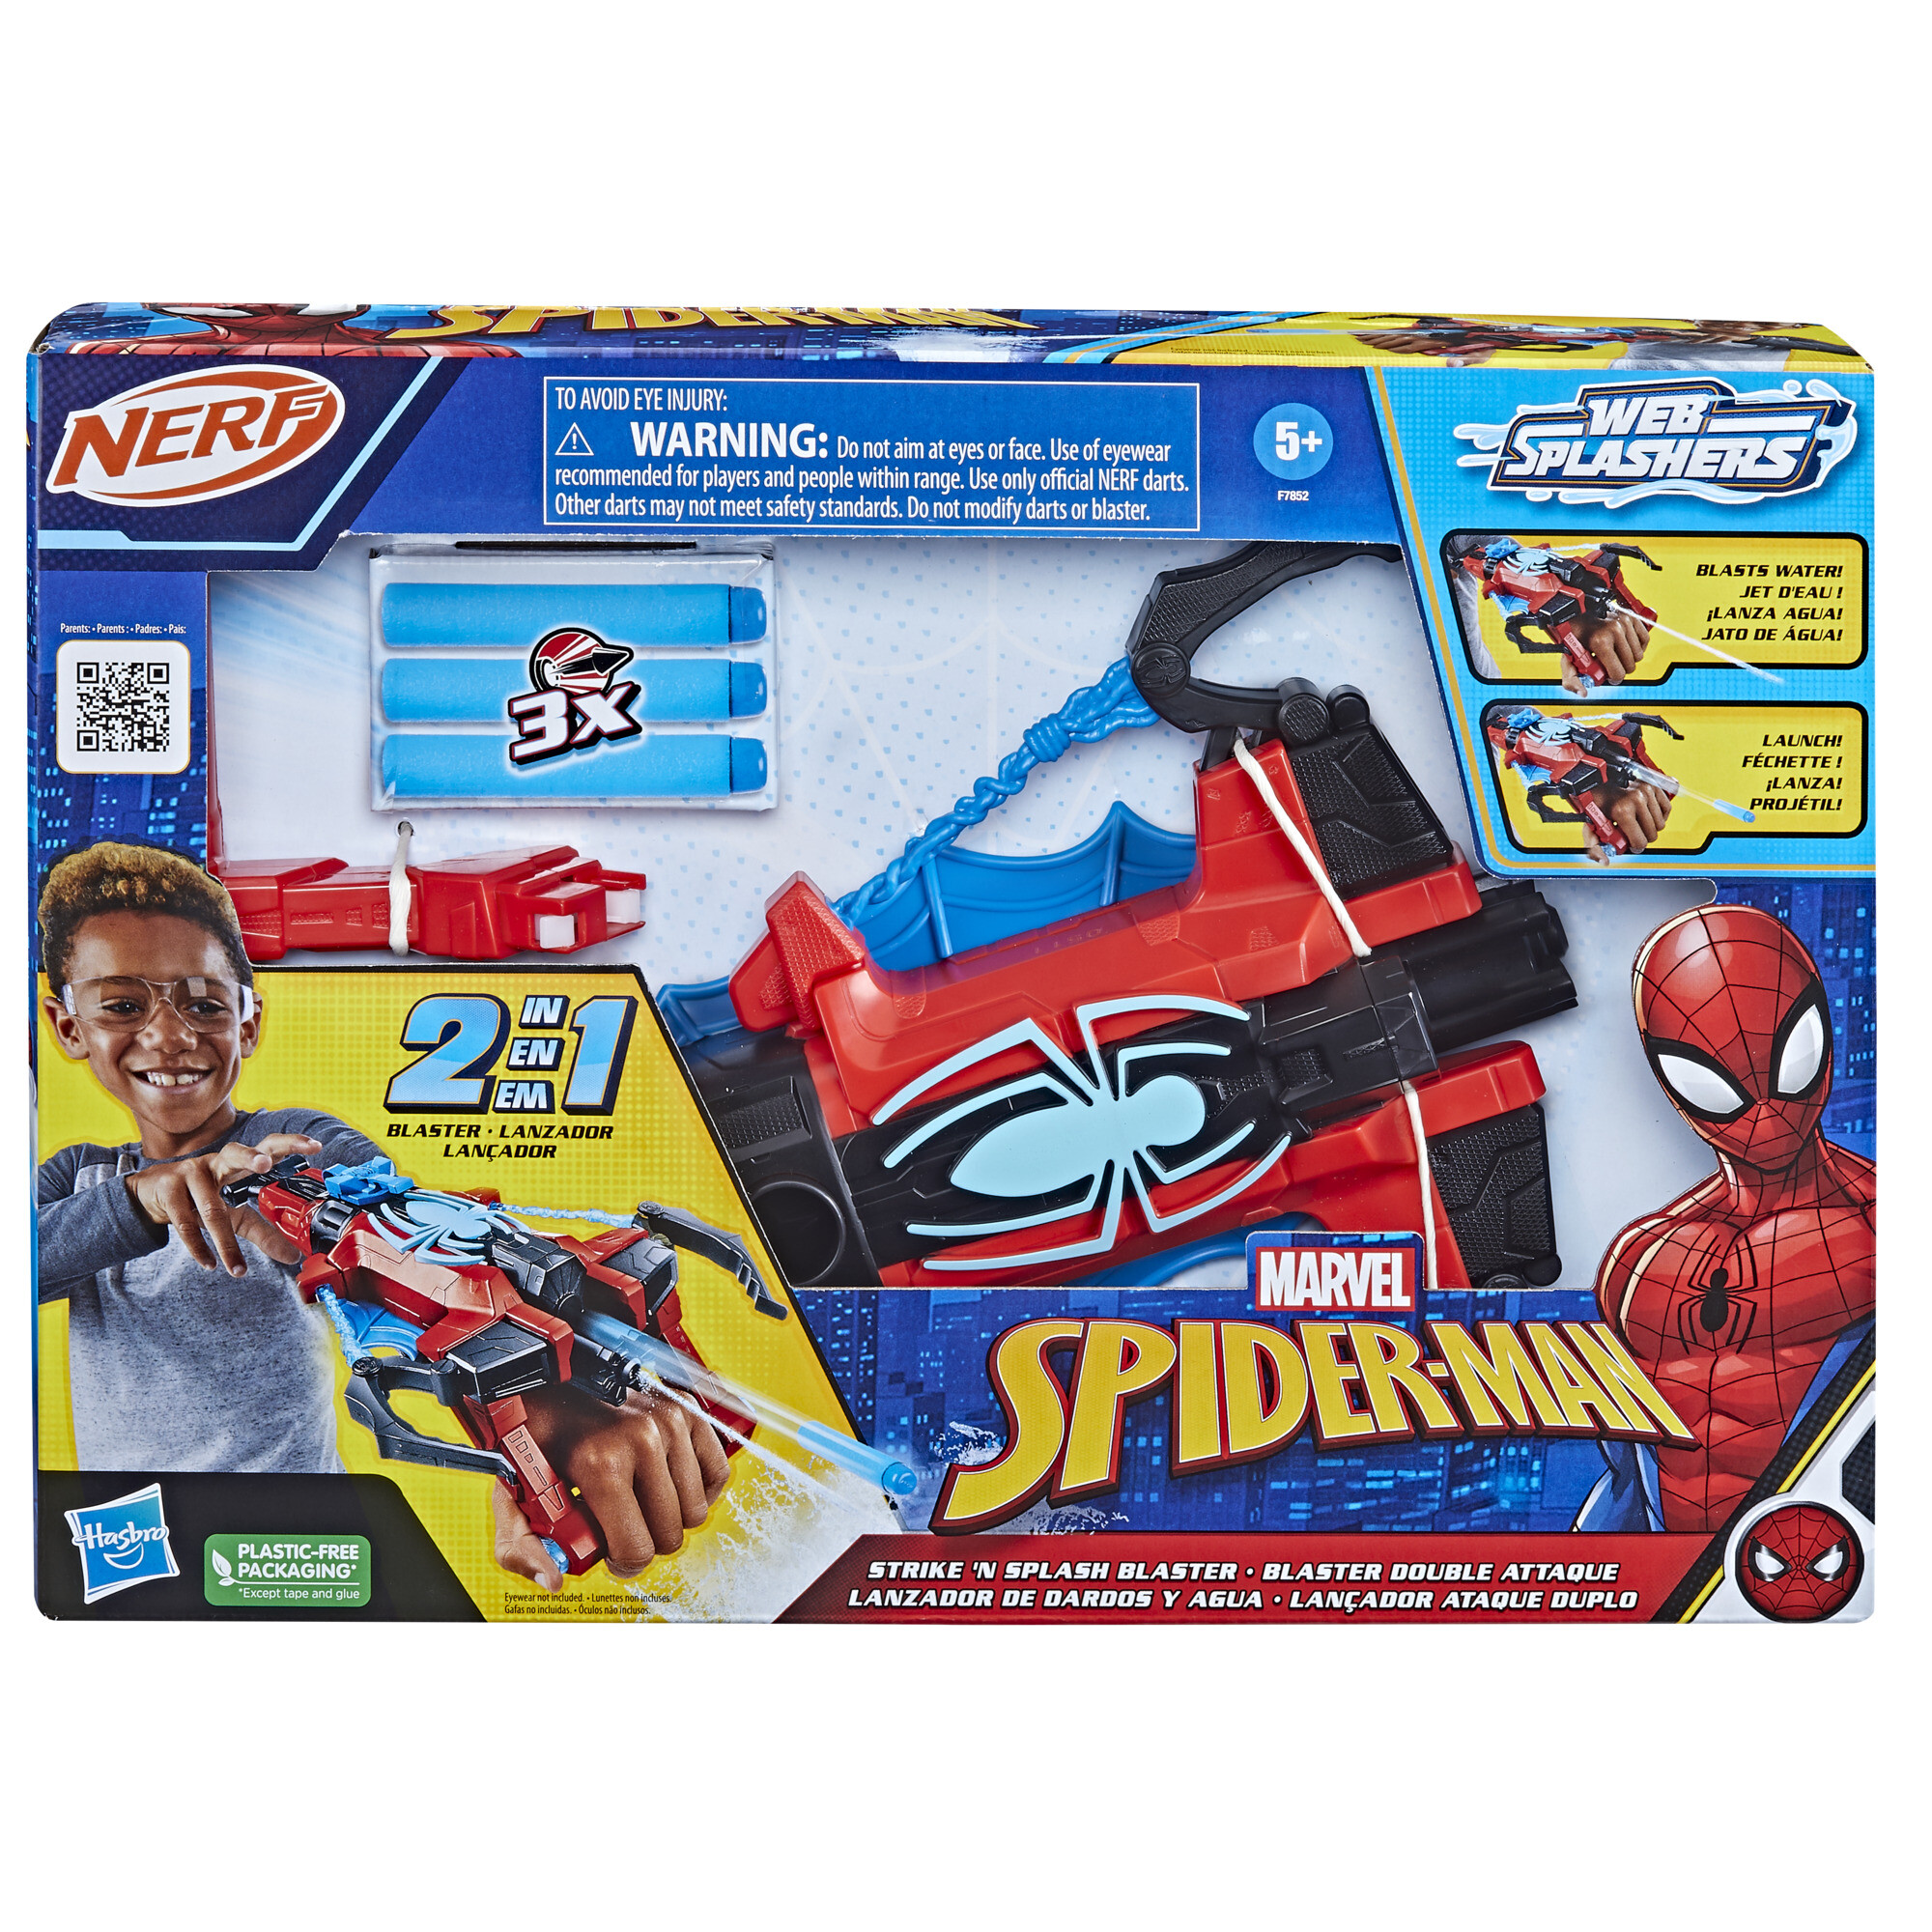 Hasbro marvel, spider-man, blaster strike 'n splash, giocattoli di supereroi, soaker nerf di spider-man - Spiderman